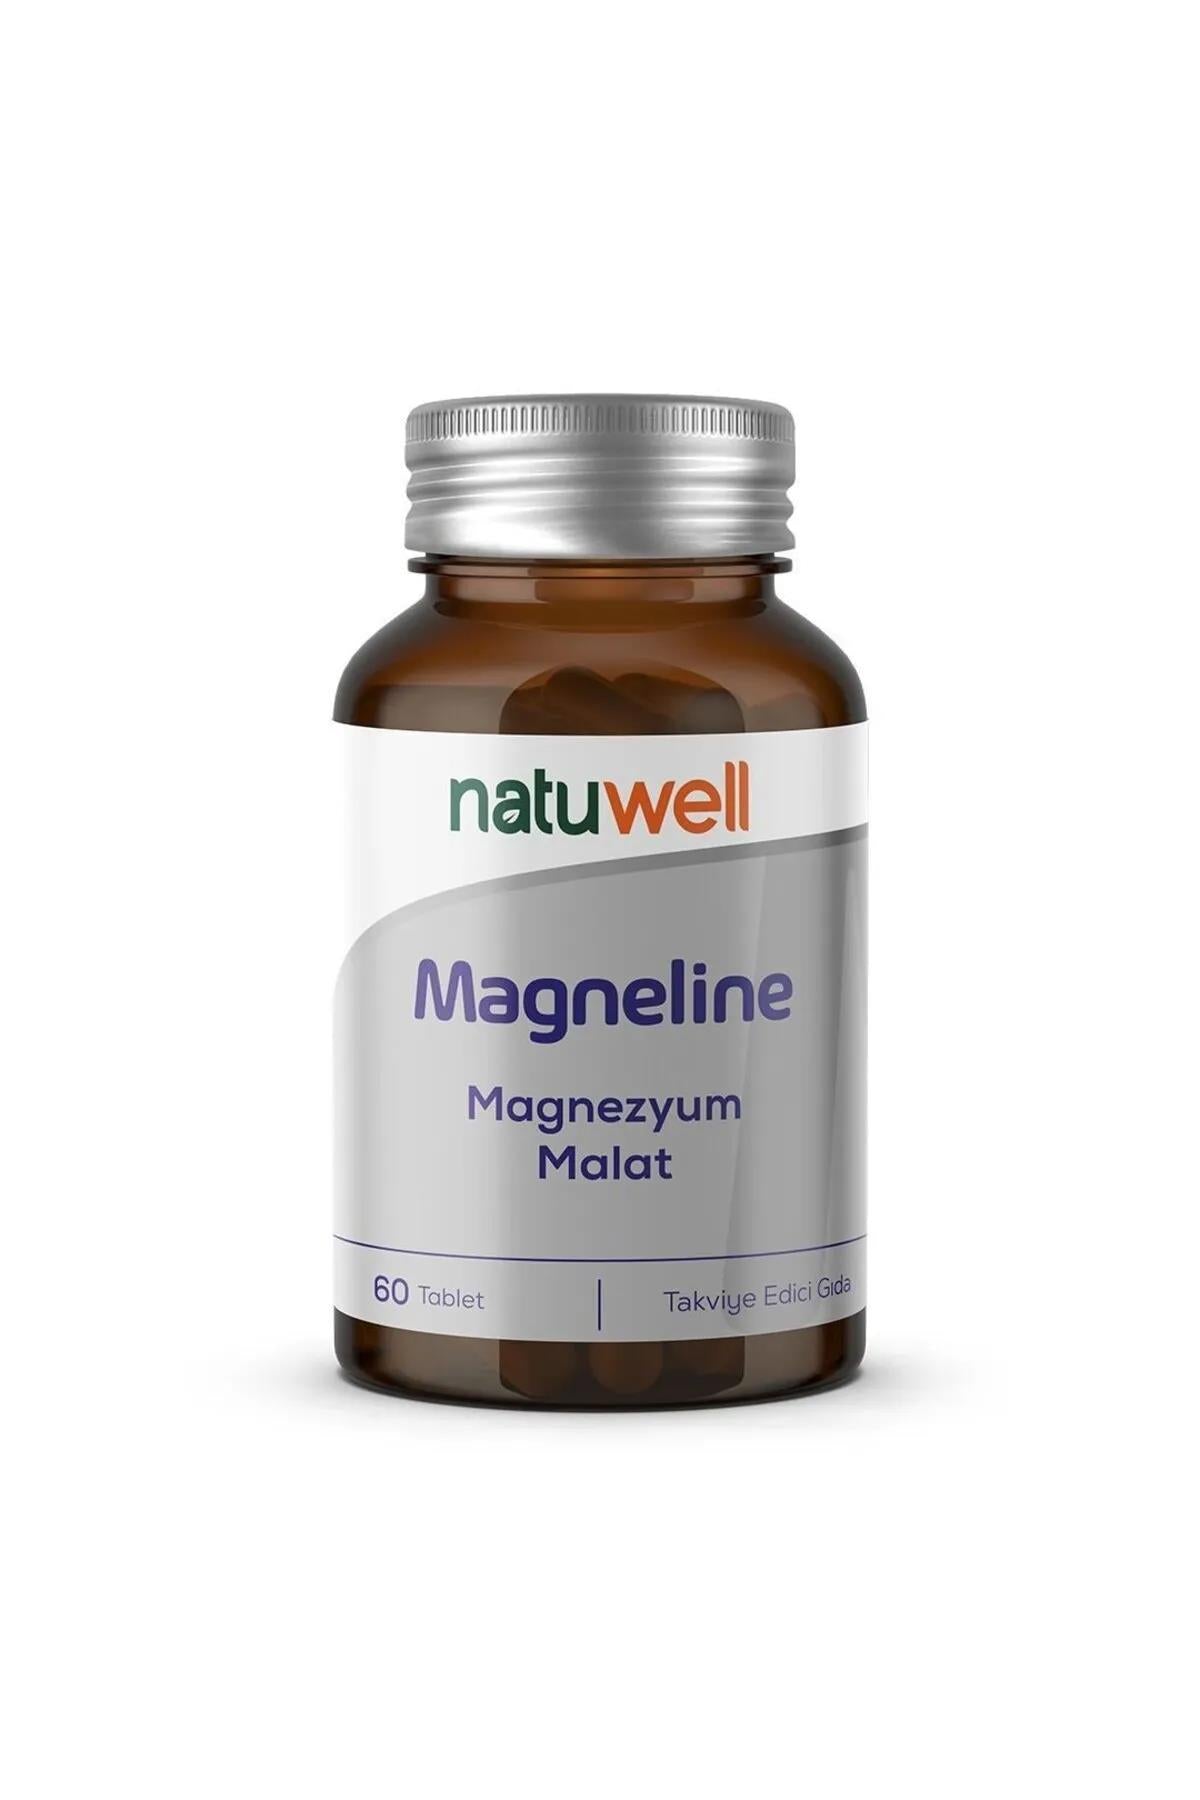 Natuwell Magneline Magnezyum Malat 60 Tablet